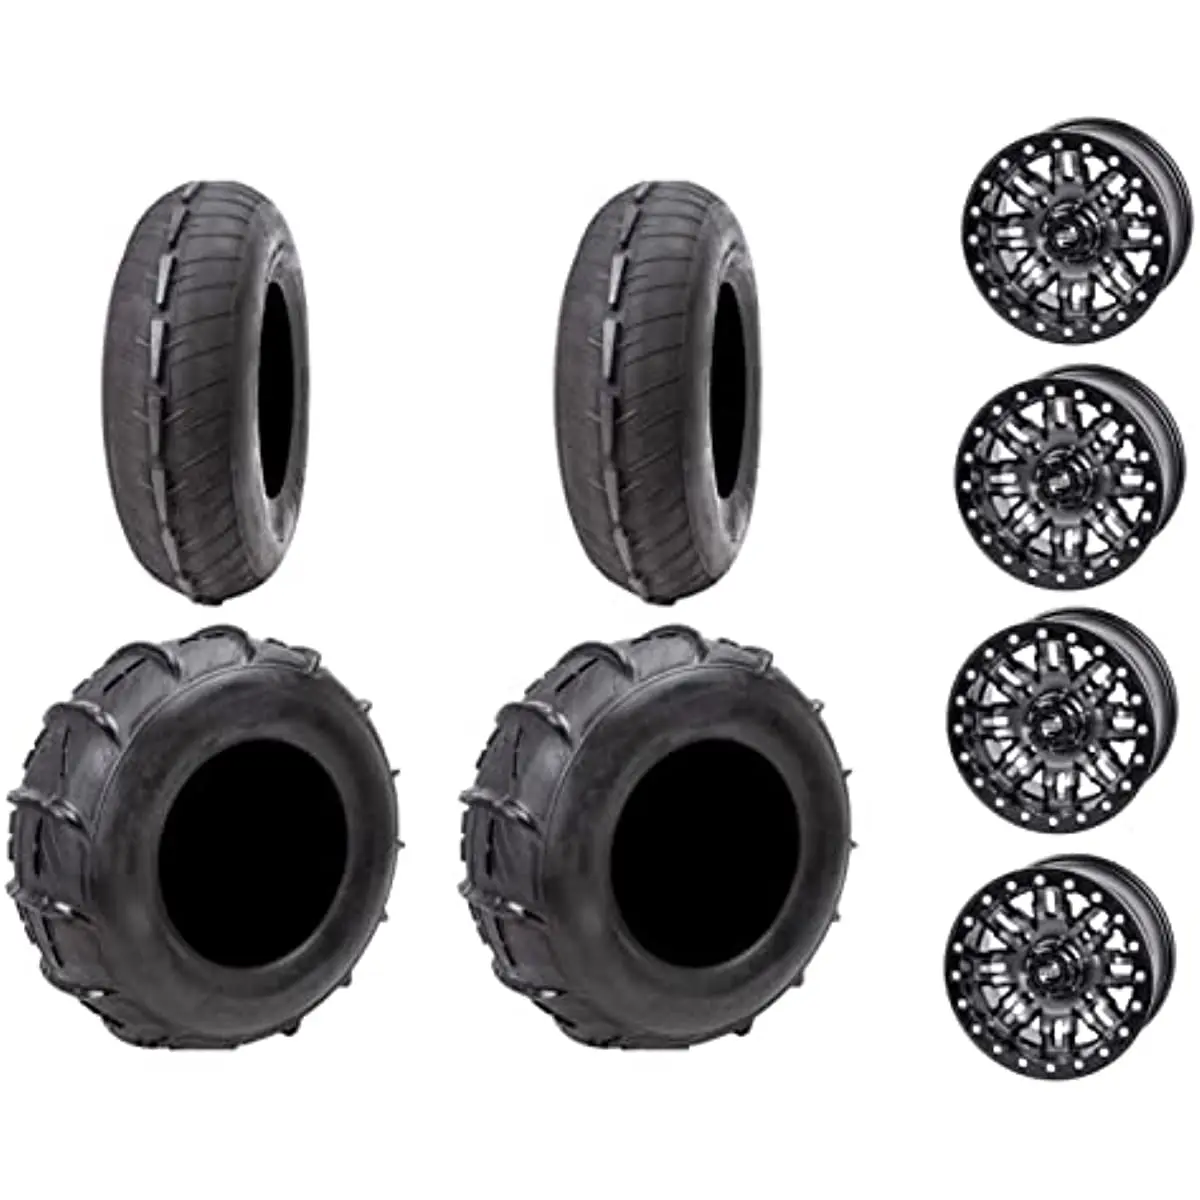 

Four 32x15 Tusk SAND LITE Front and Rear UTV Sand Tires mounted on Tusk TETON Beadlock Wheels - For CAN-AM MAVERICK X3-4/137